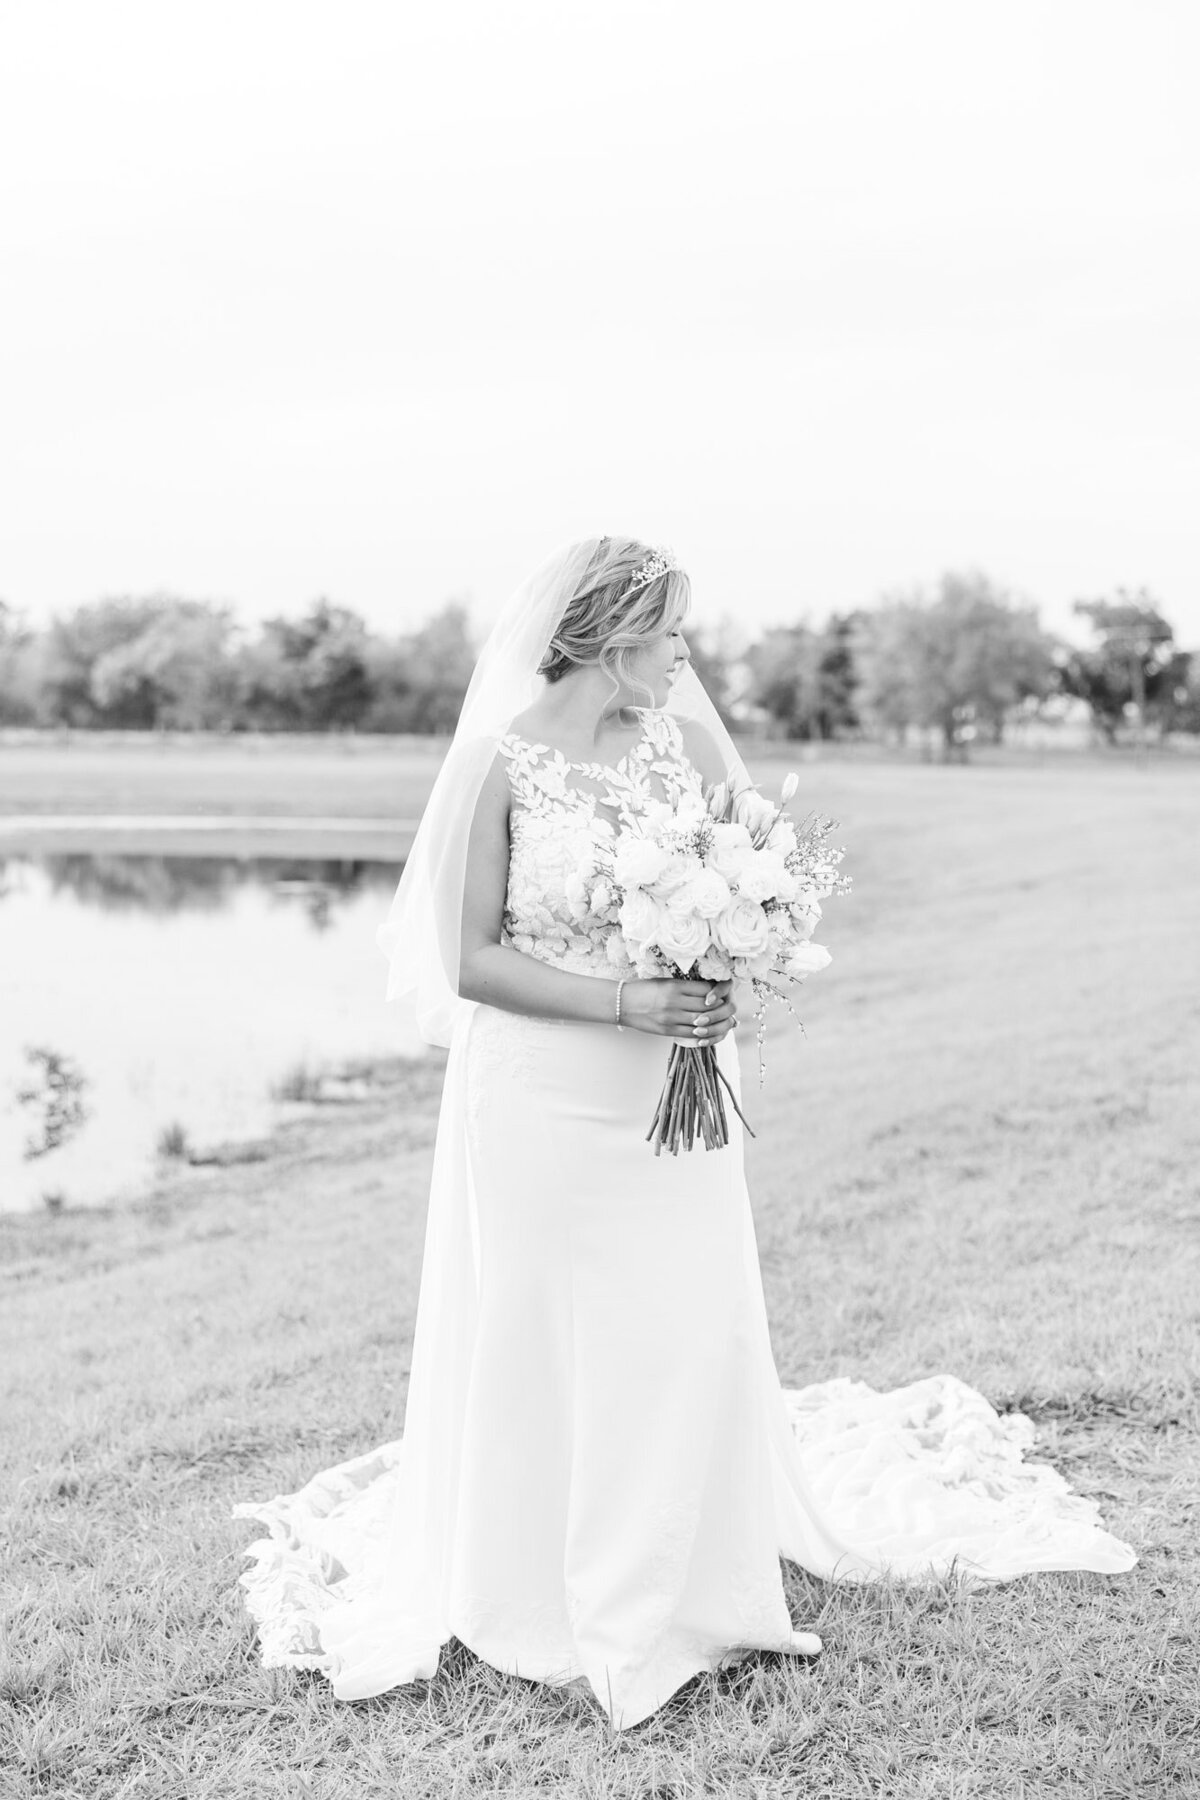 Chloe & Emerson - South Florida Wedding - Deanna Grace Photography -31